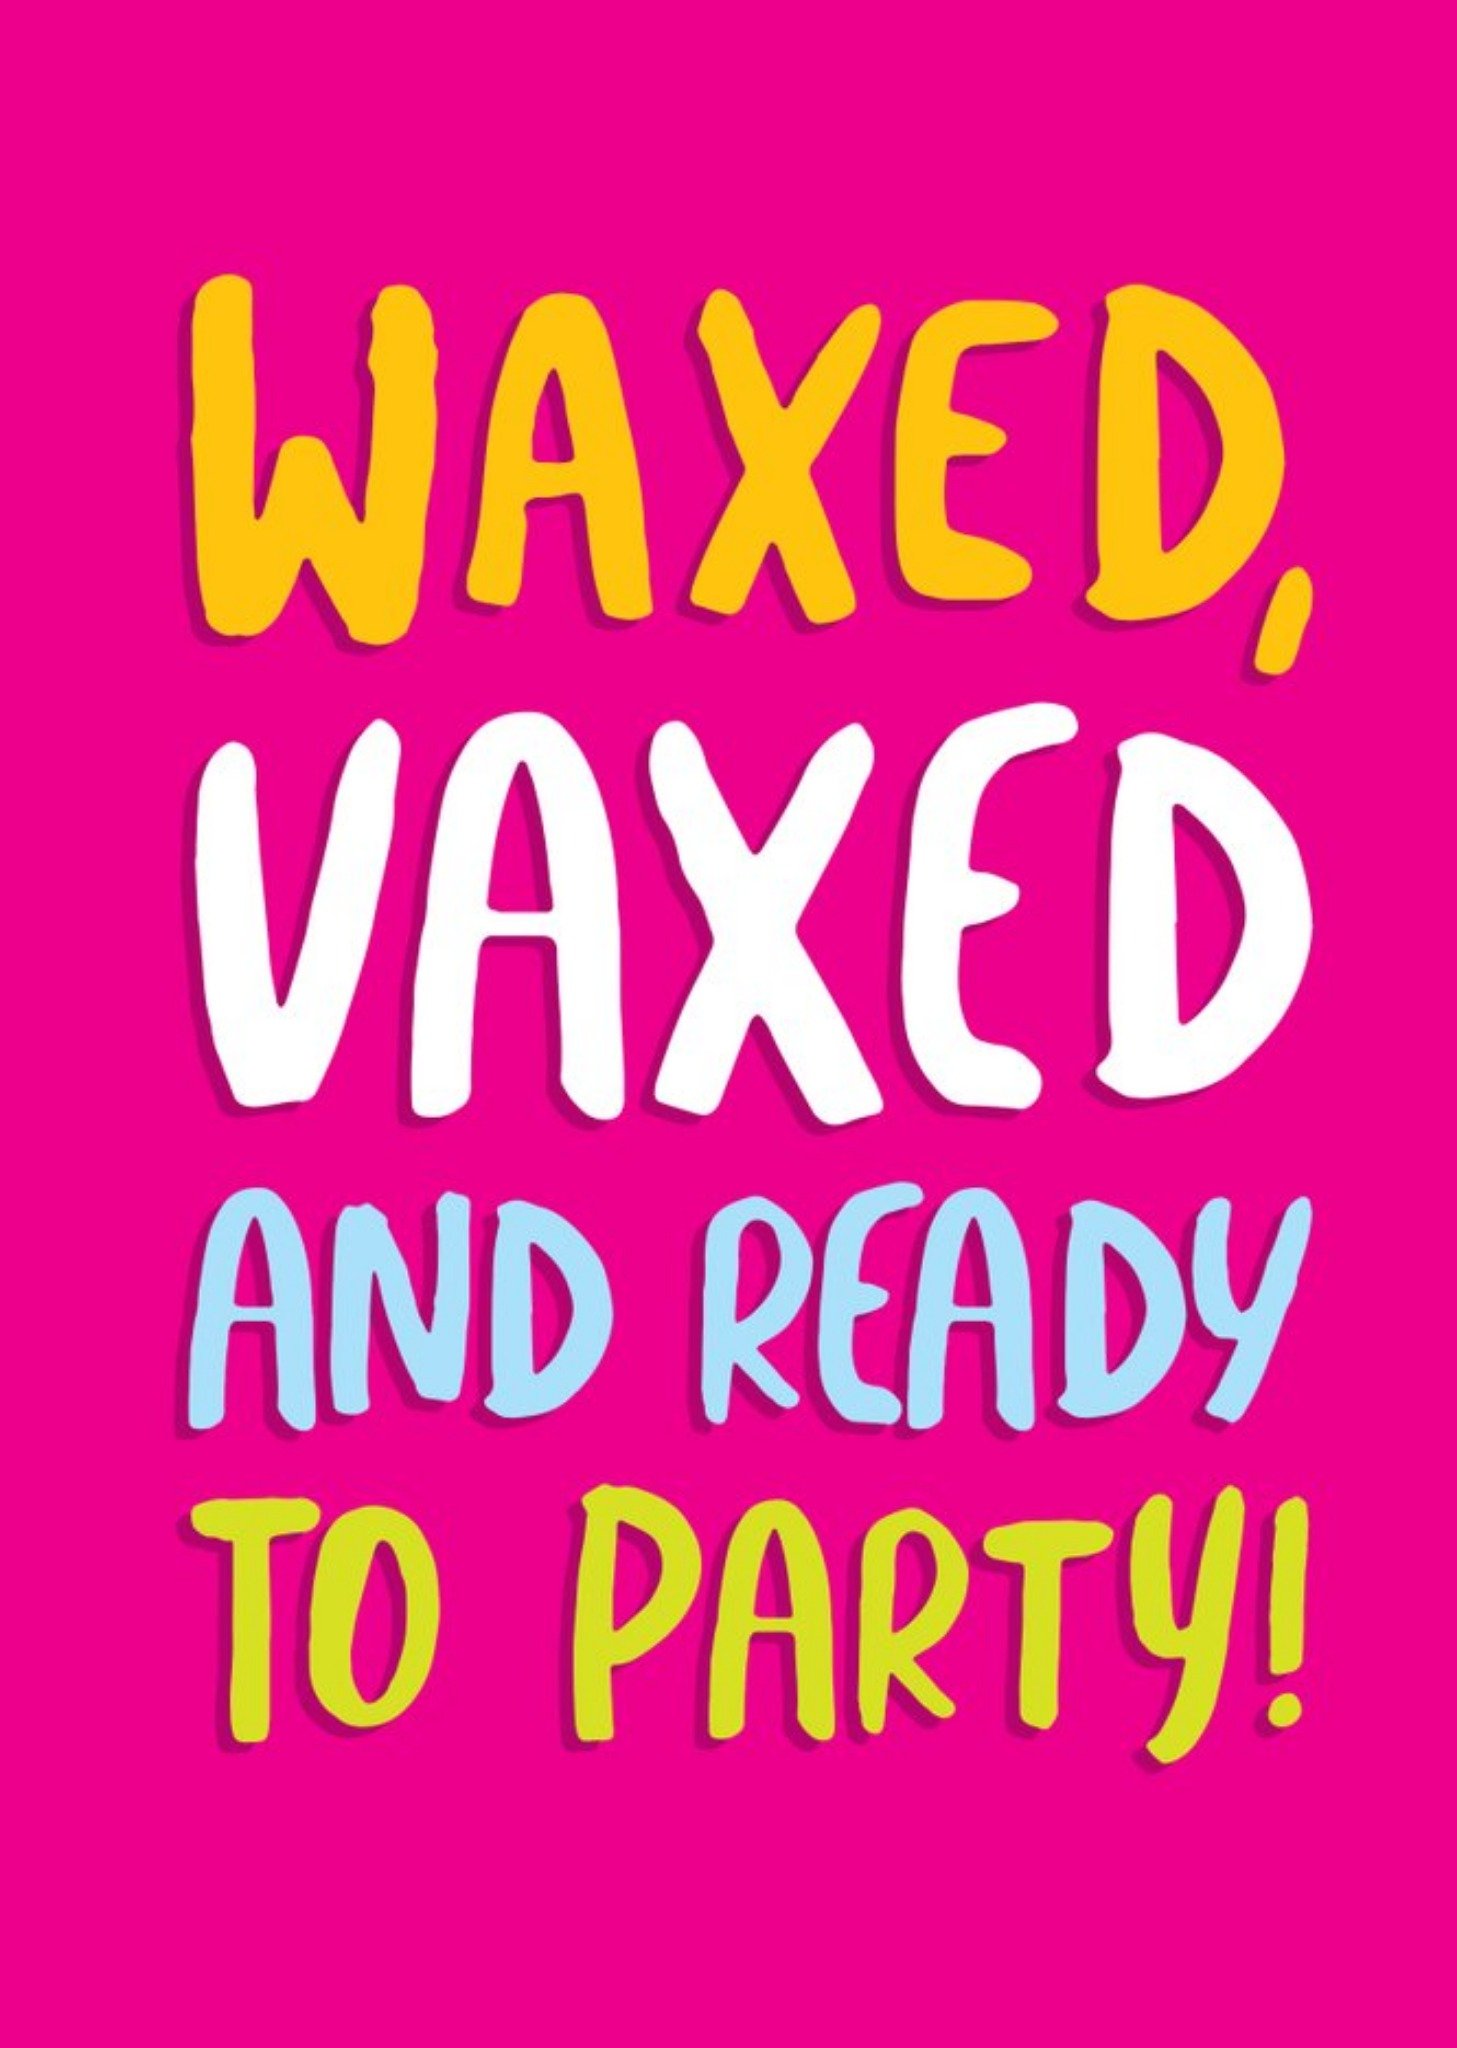 Moonpig Funny Covid Waxed Vaxed And Ready To Party Birthday Card Ecard